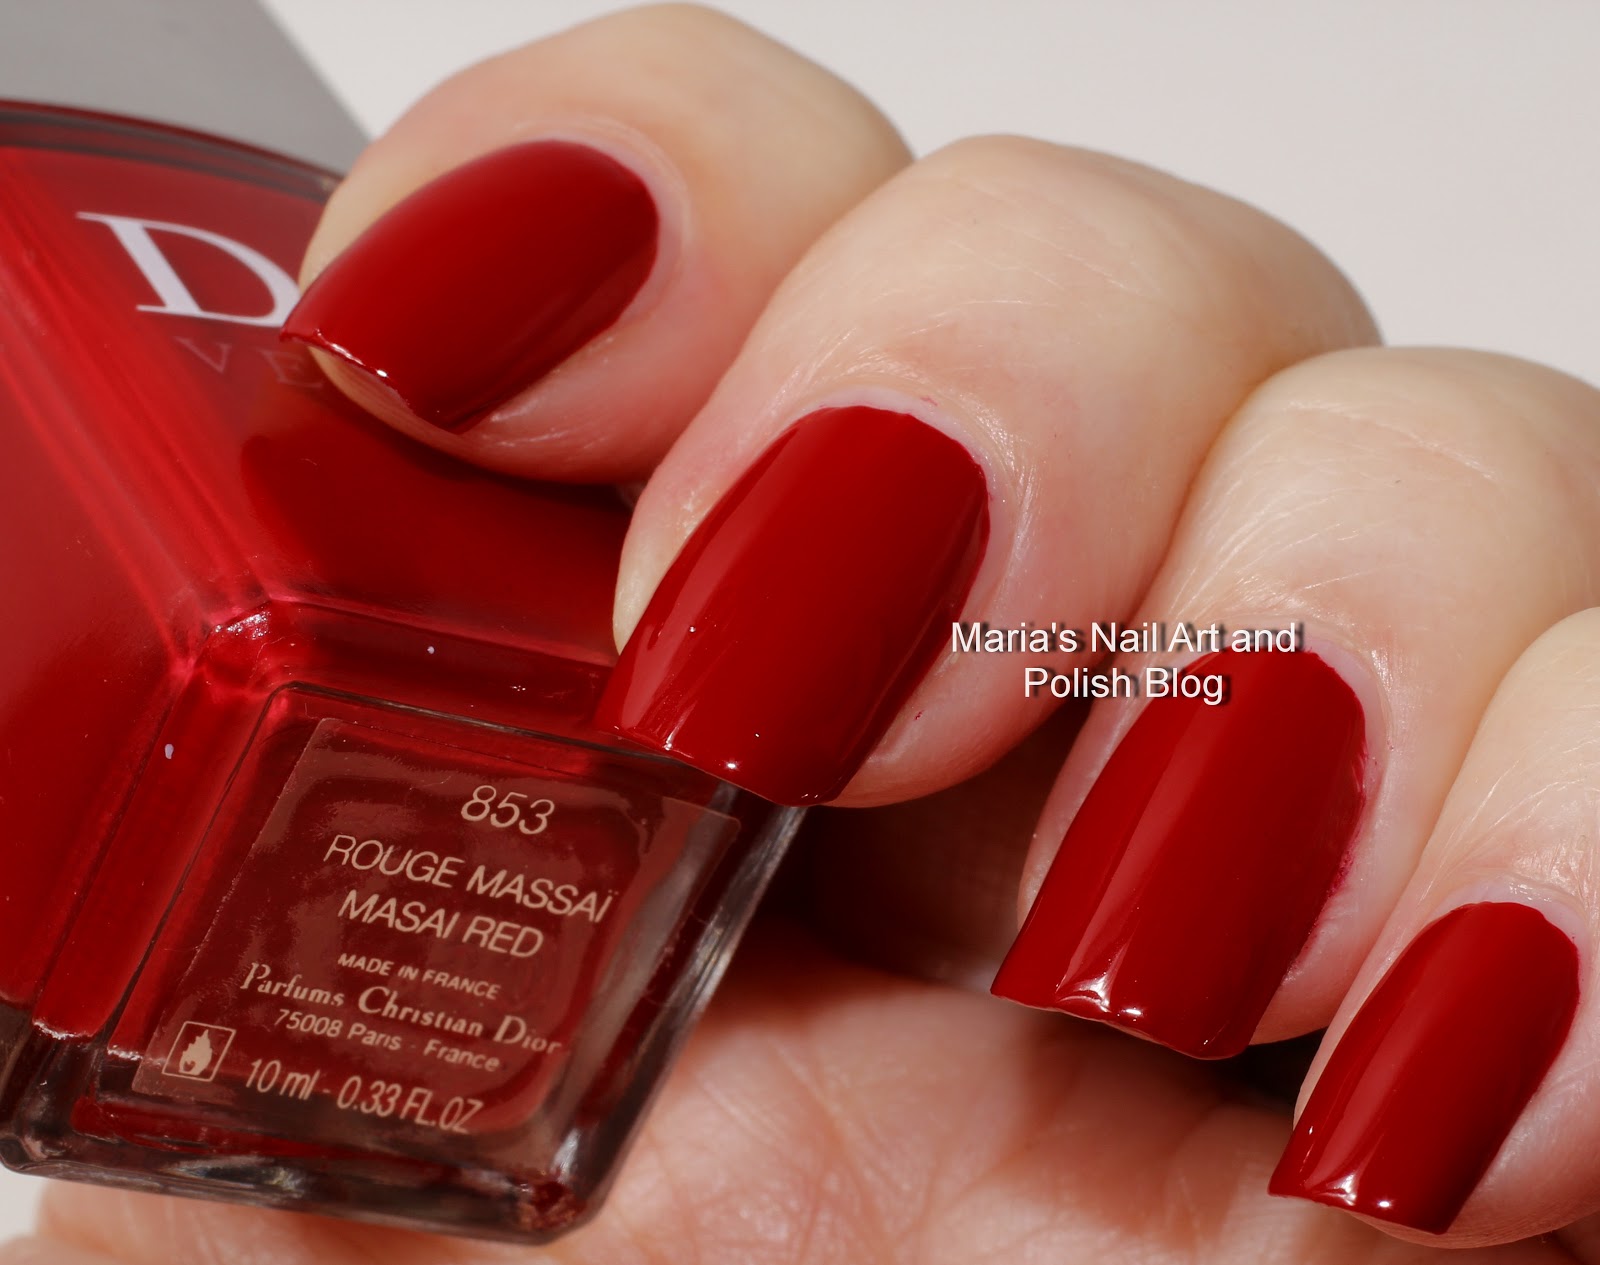 Marias Nail Art and Polish Blog: Dior Rouge Massai - Masai Red swatches ...